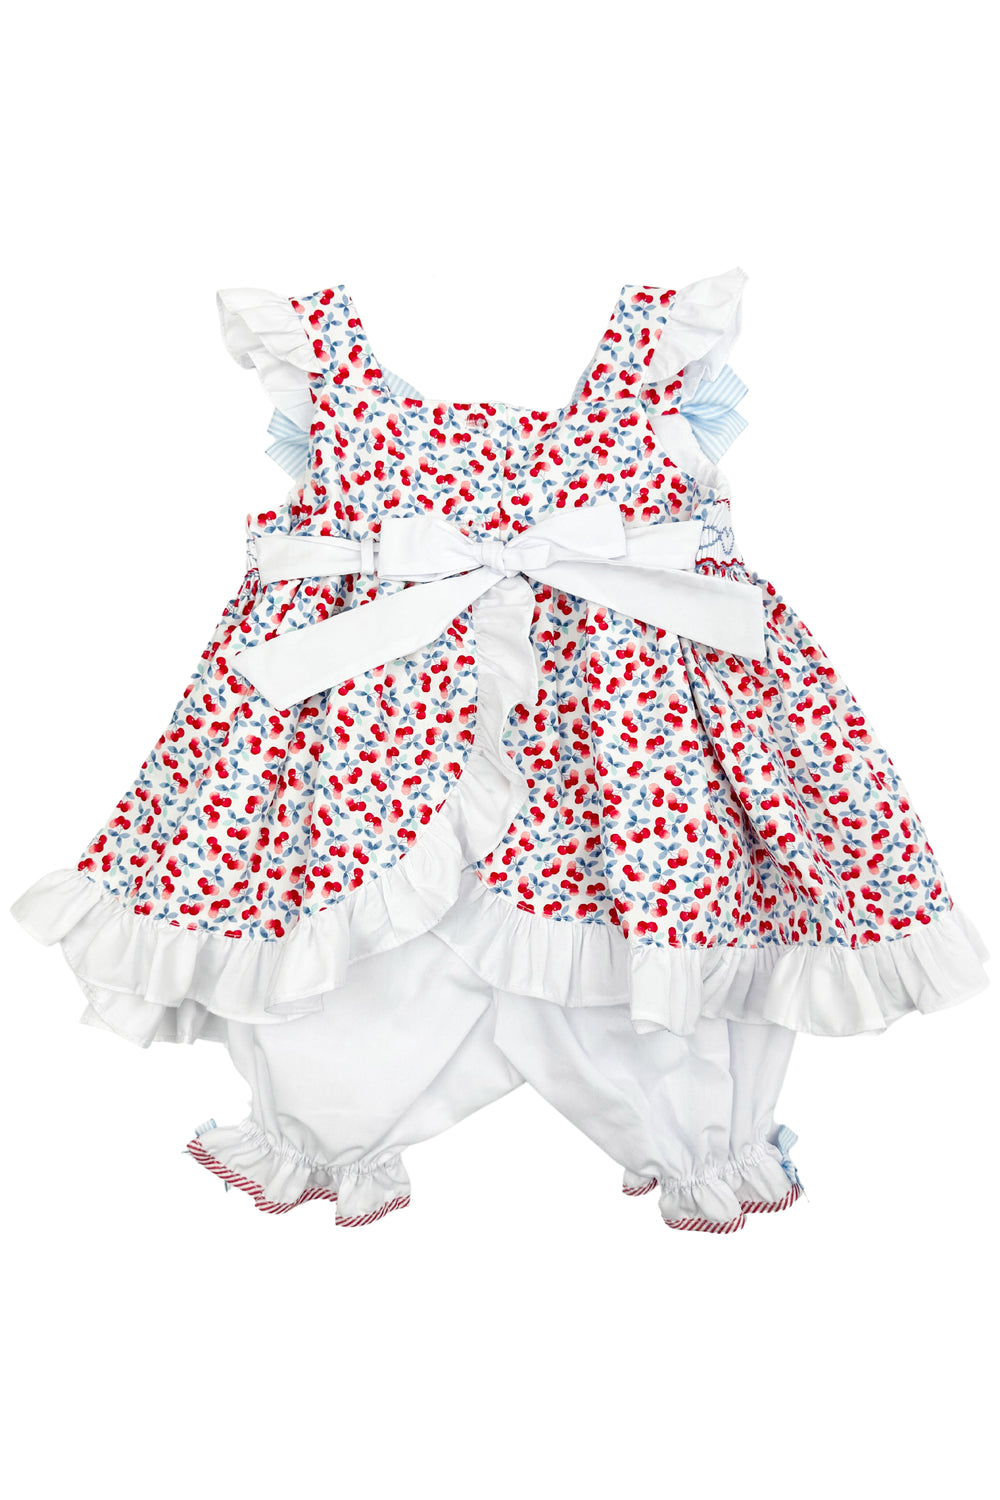 Pretty Originals "Birdie" Red Cherry Print Smocked Dress, Bloomers & Headband | Millie and John